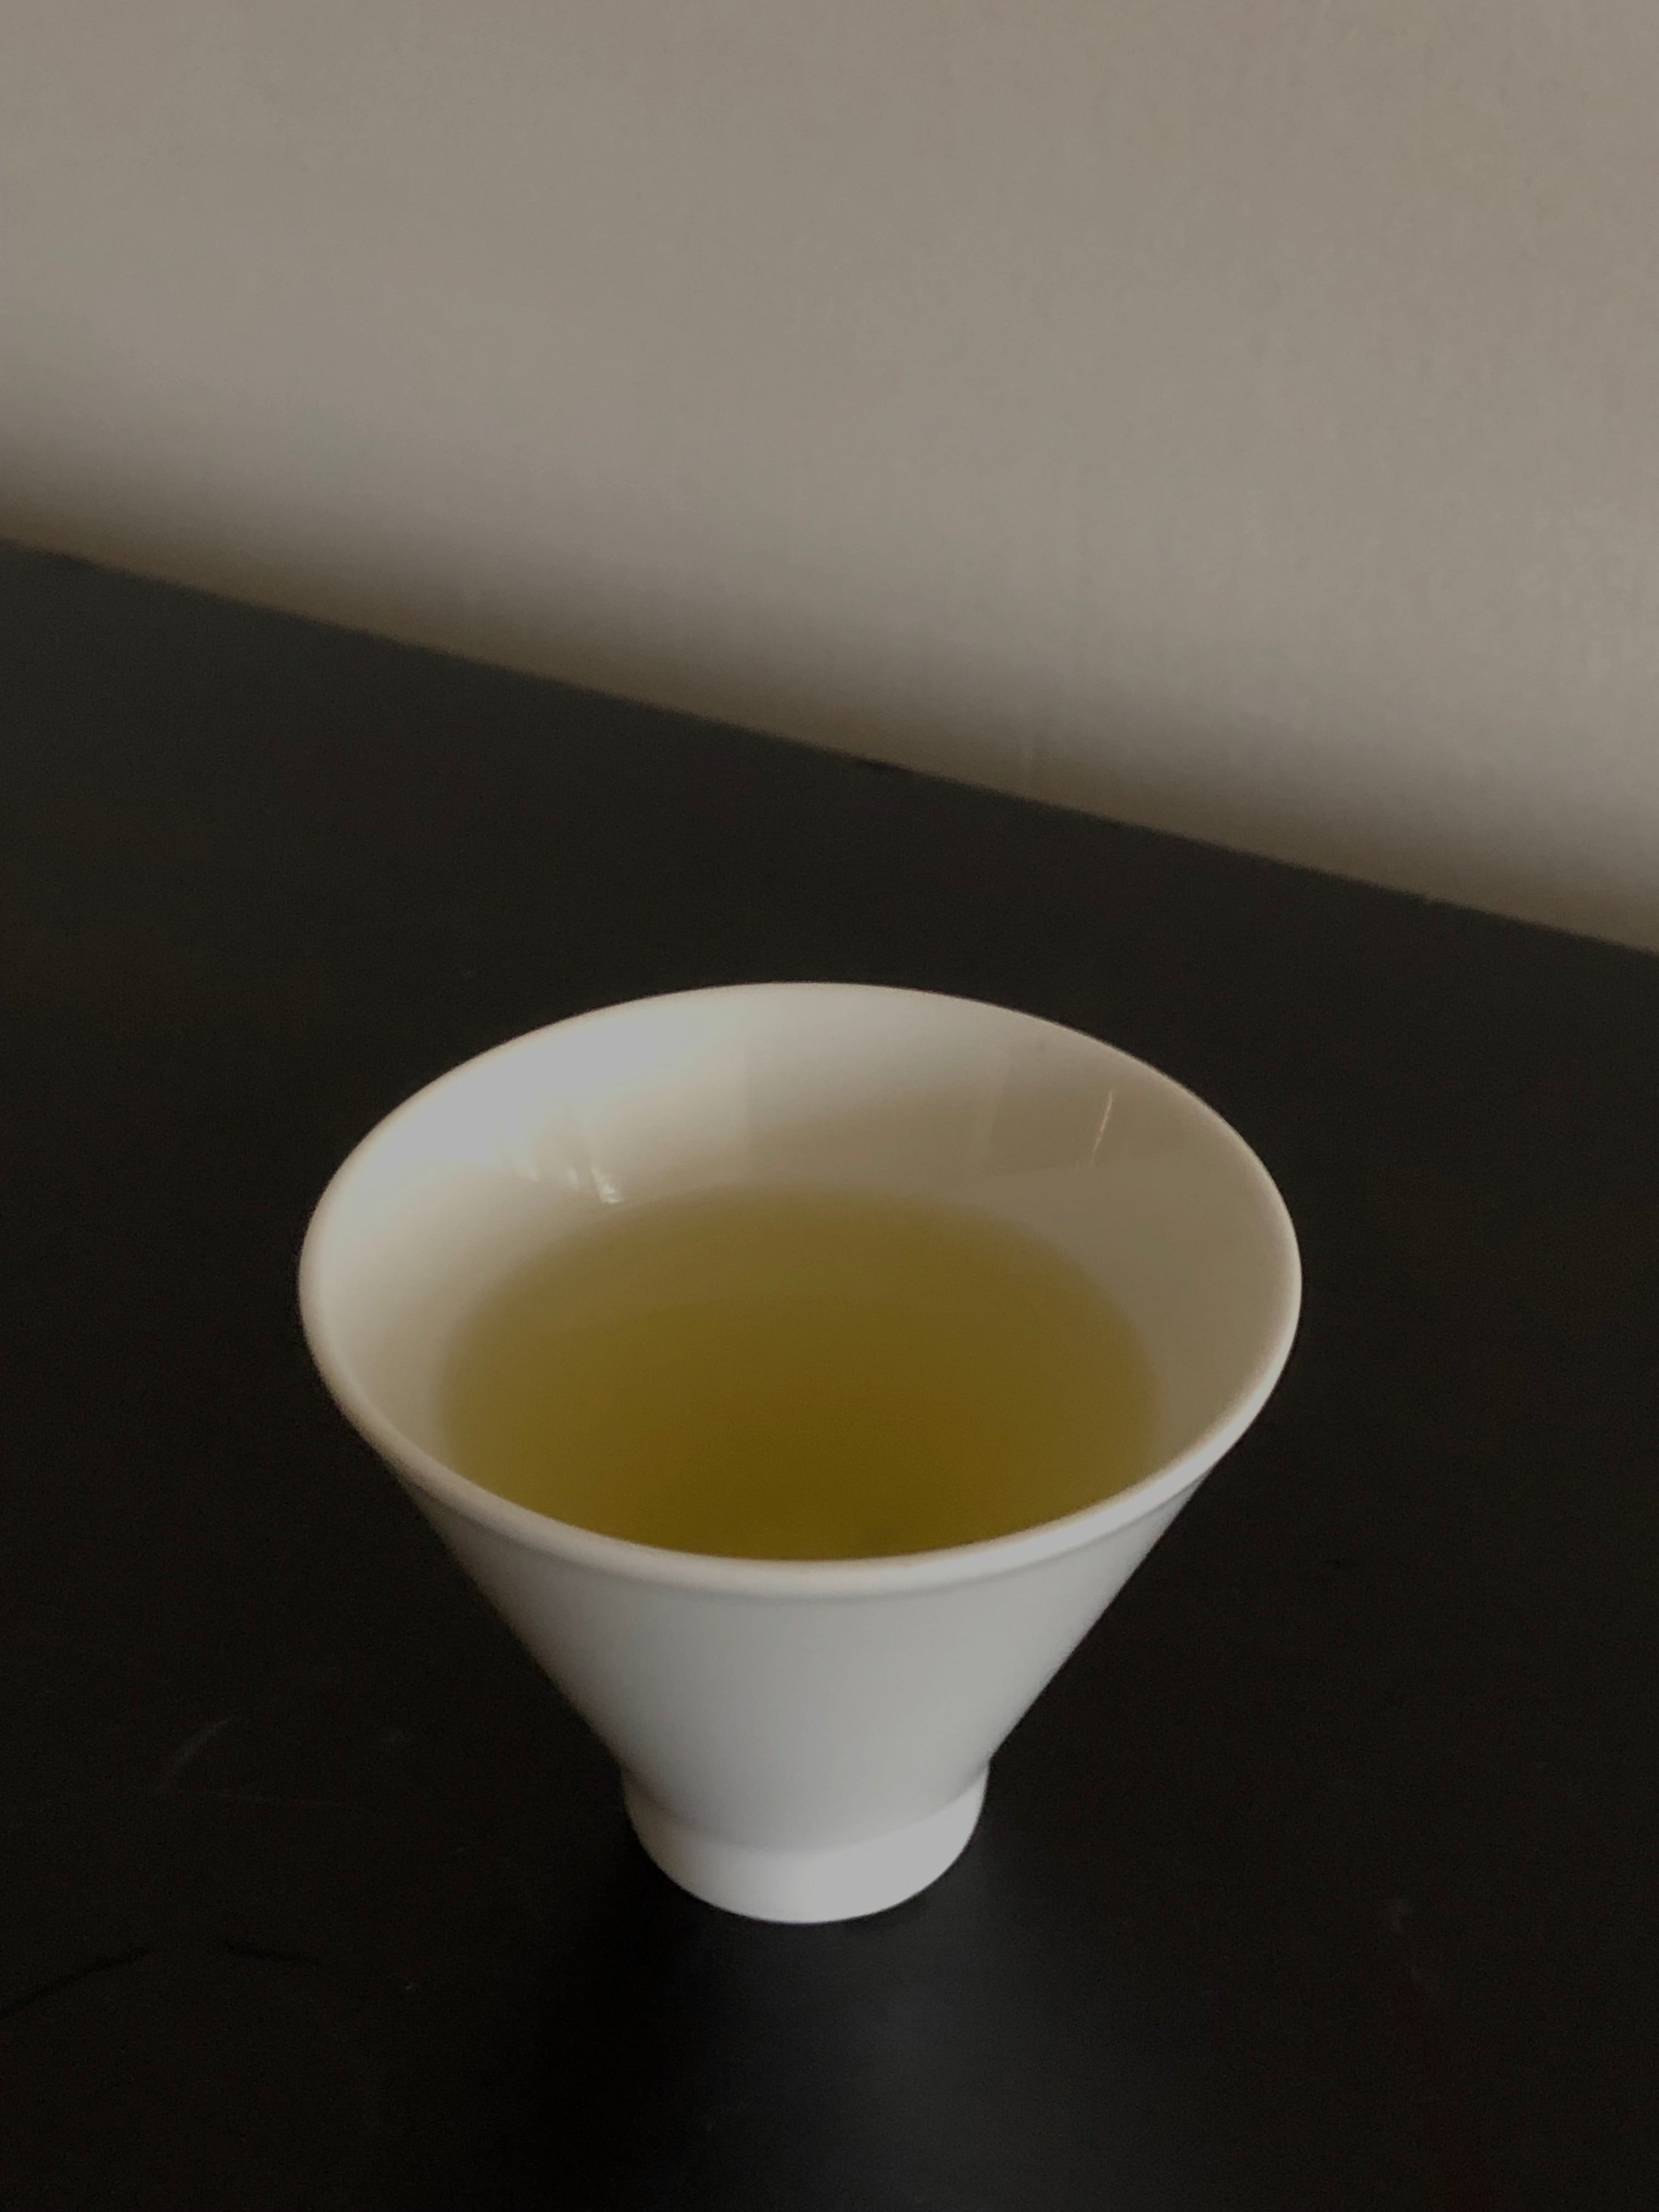 Yukifuruyama sencha green tea loose leaf brew side view from Yame Fukuoka sold by Sabo Tea Australia - Chiyonoen